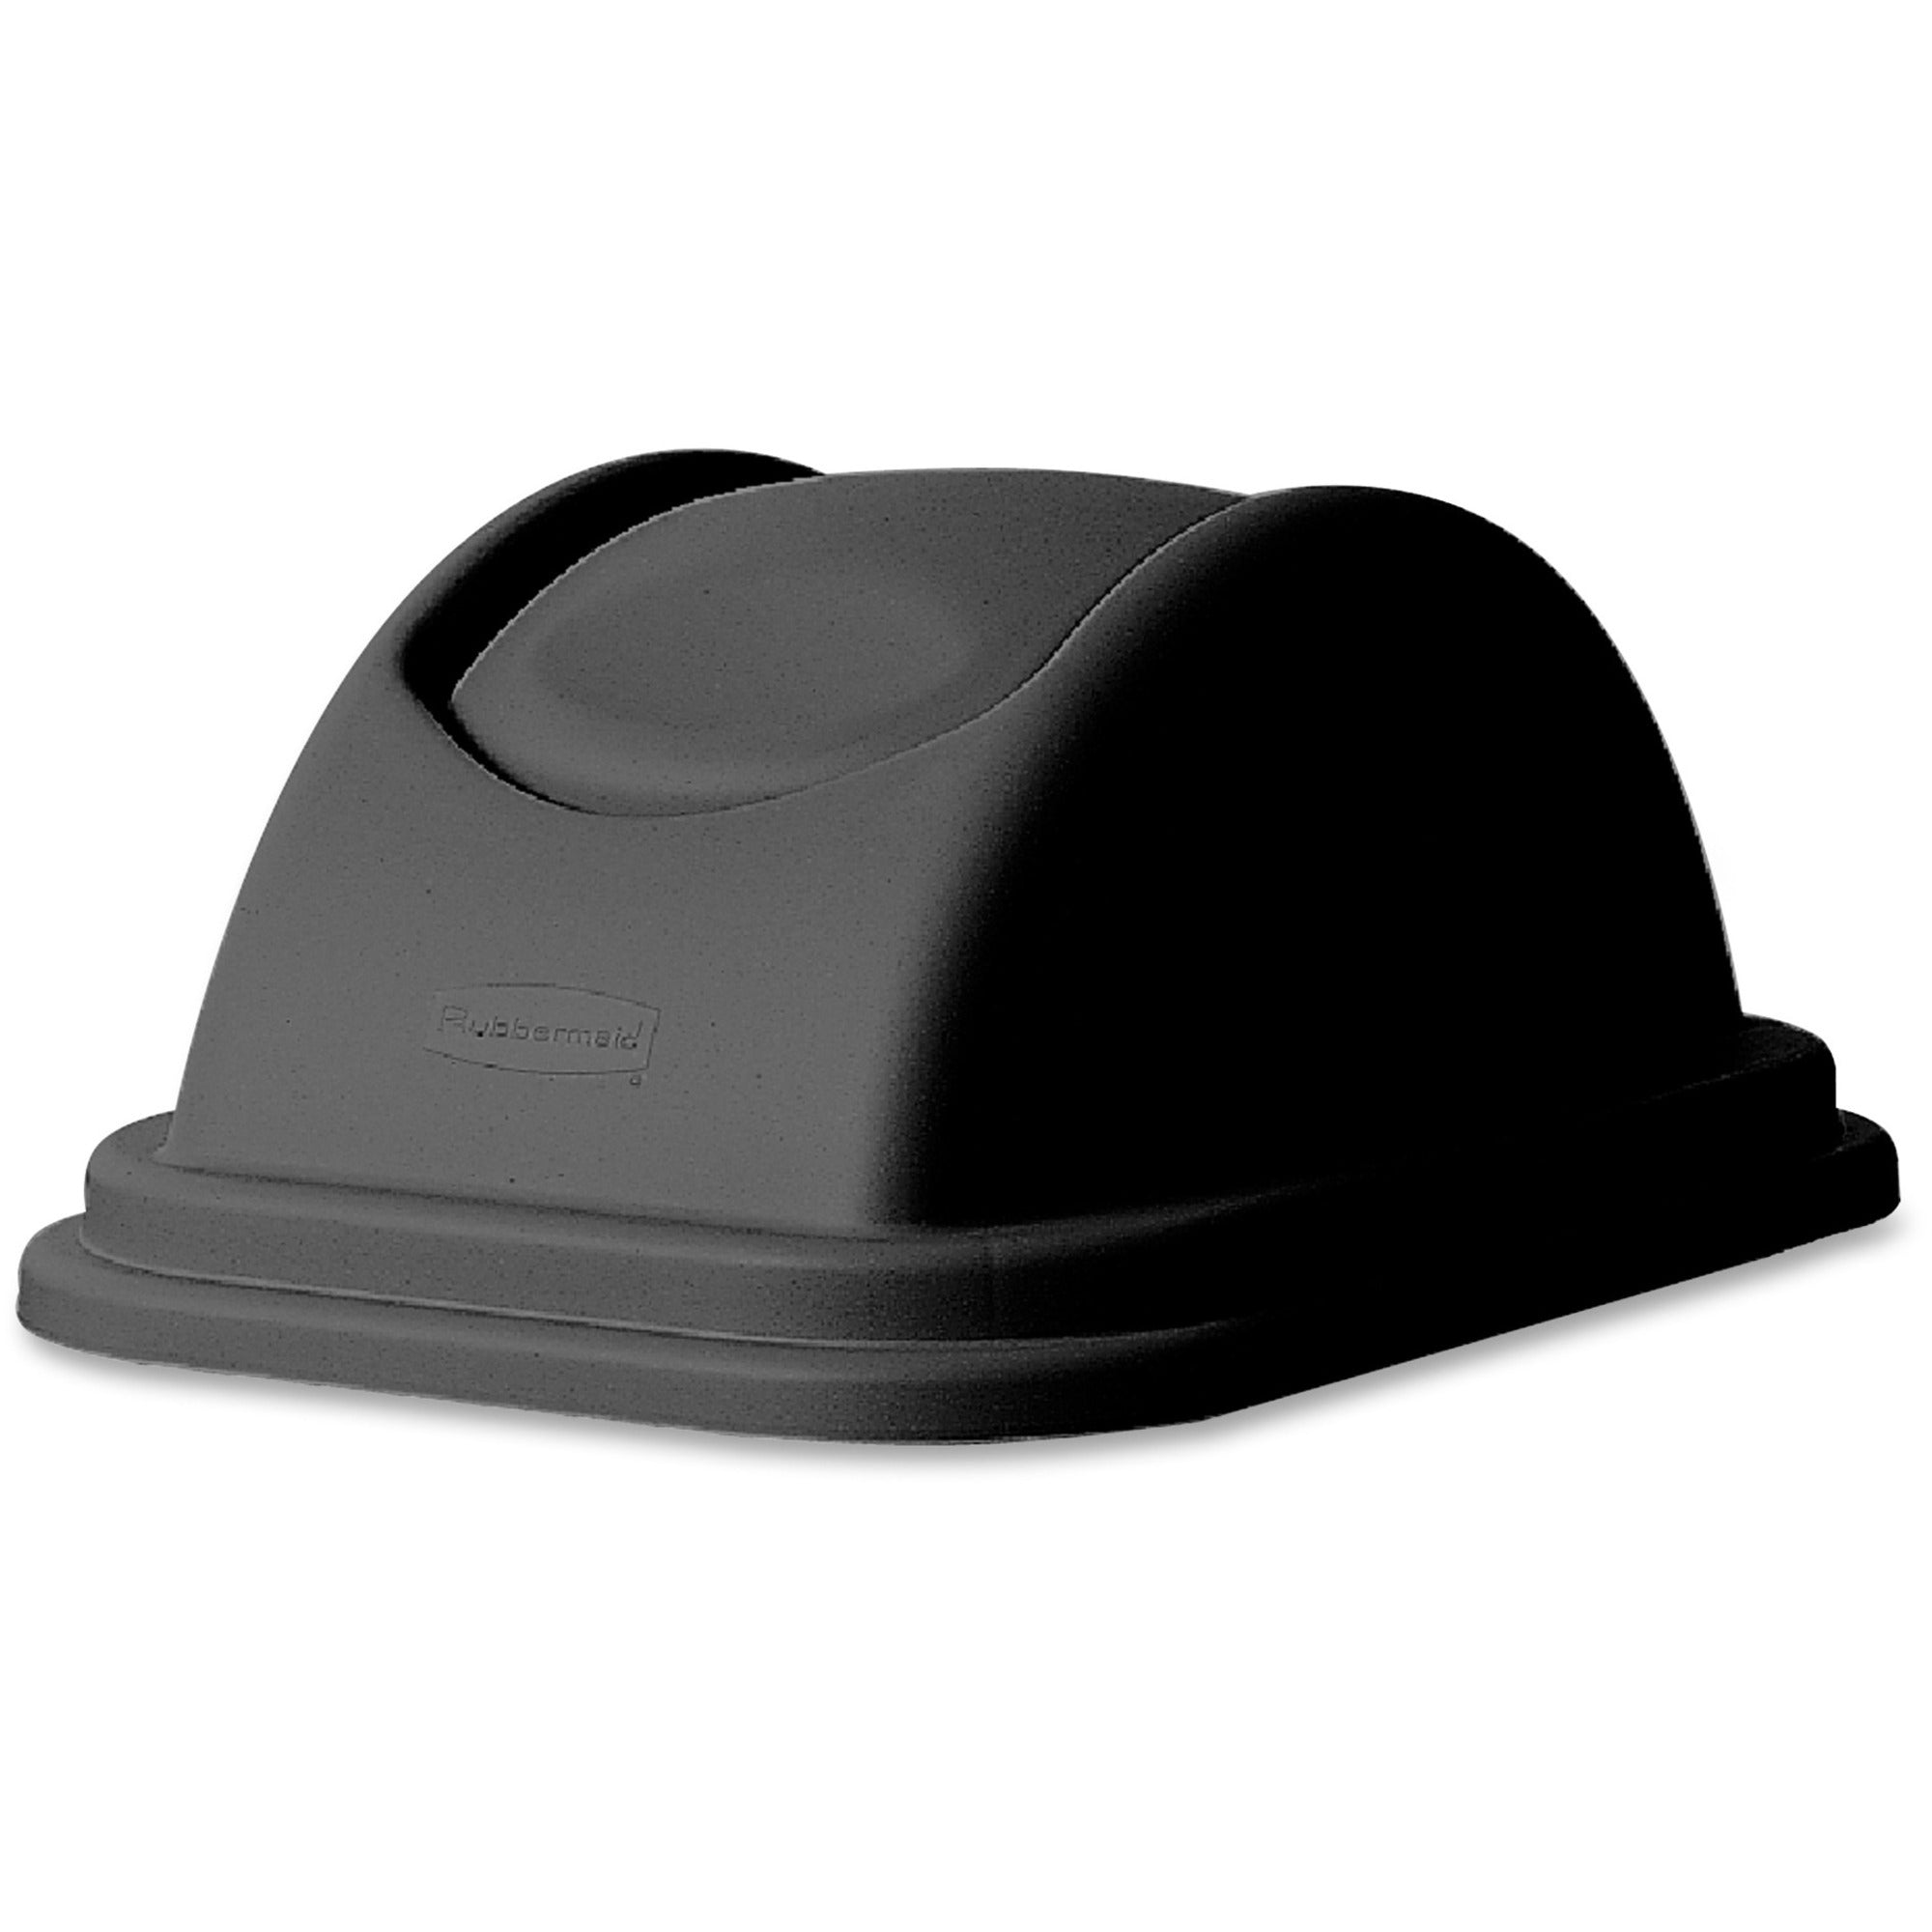 rubbermaid-commercial-large-wastebasket-lids-dome-plastic-6-carton-black_rcp306700bkct - 1